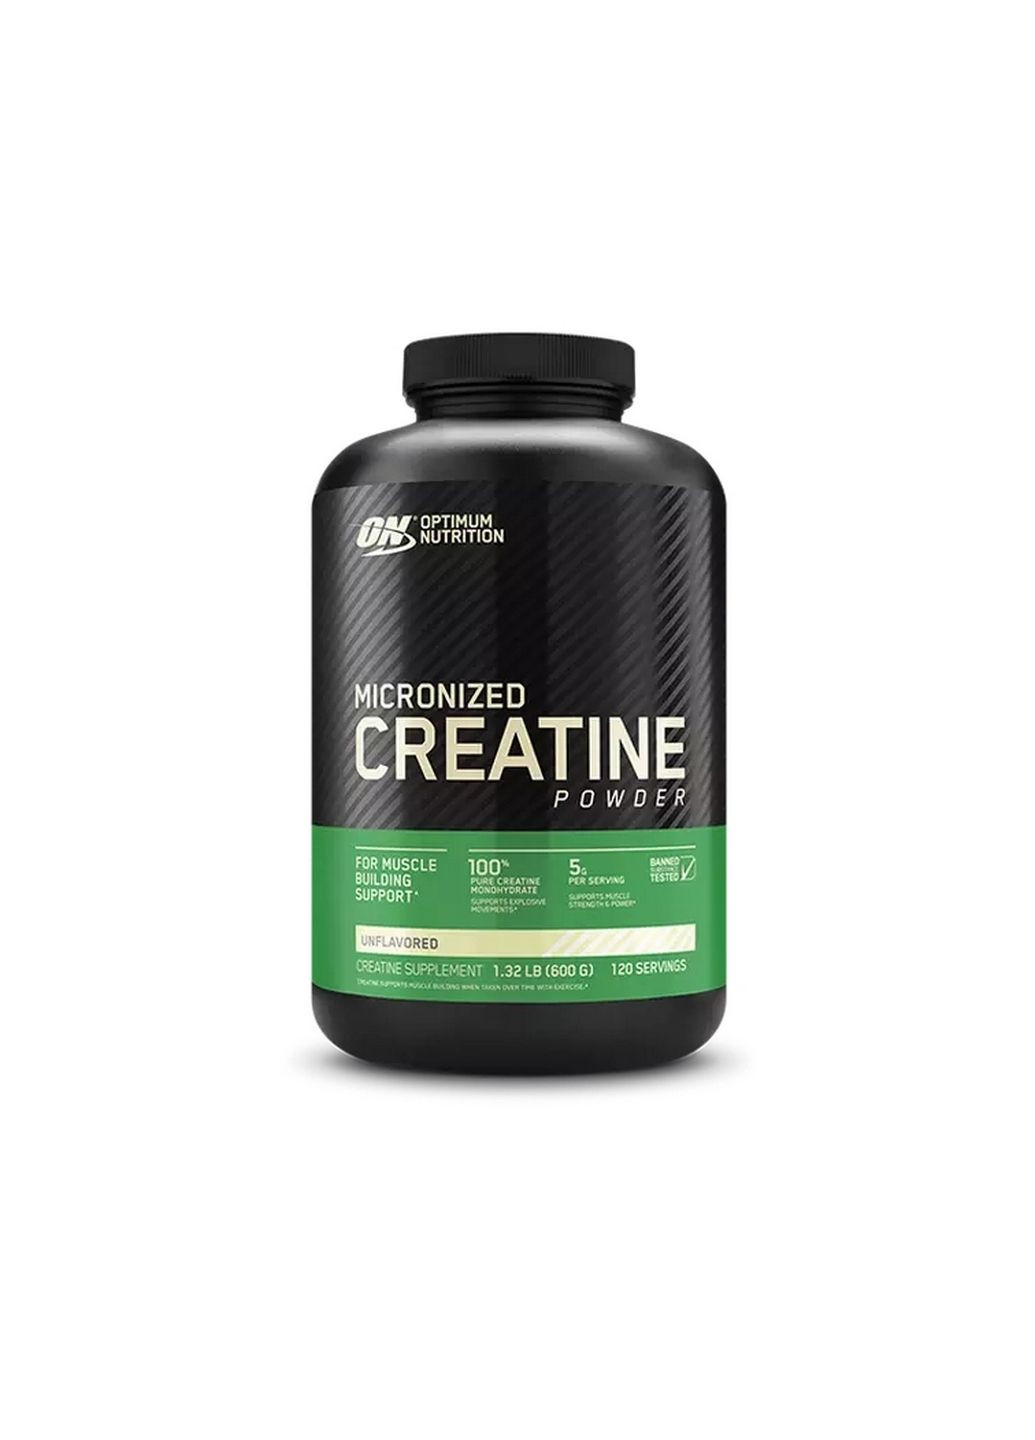 Креатин Optimum Micronized Creatine Powder, 600 грам Optimum Nutrition (293480863)